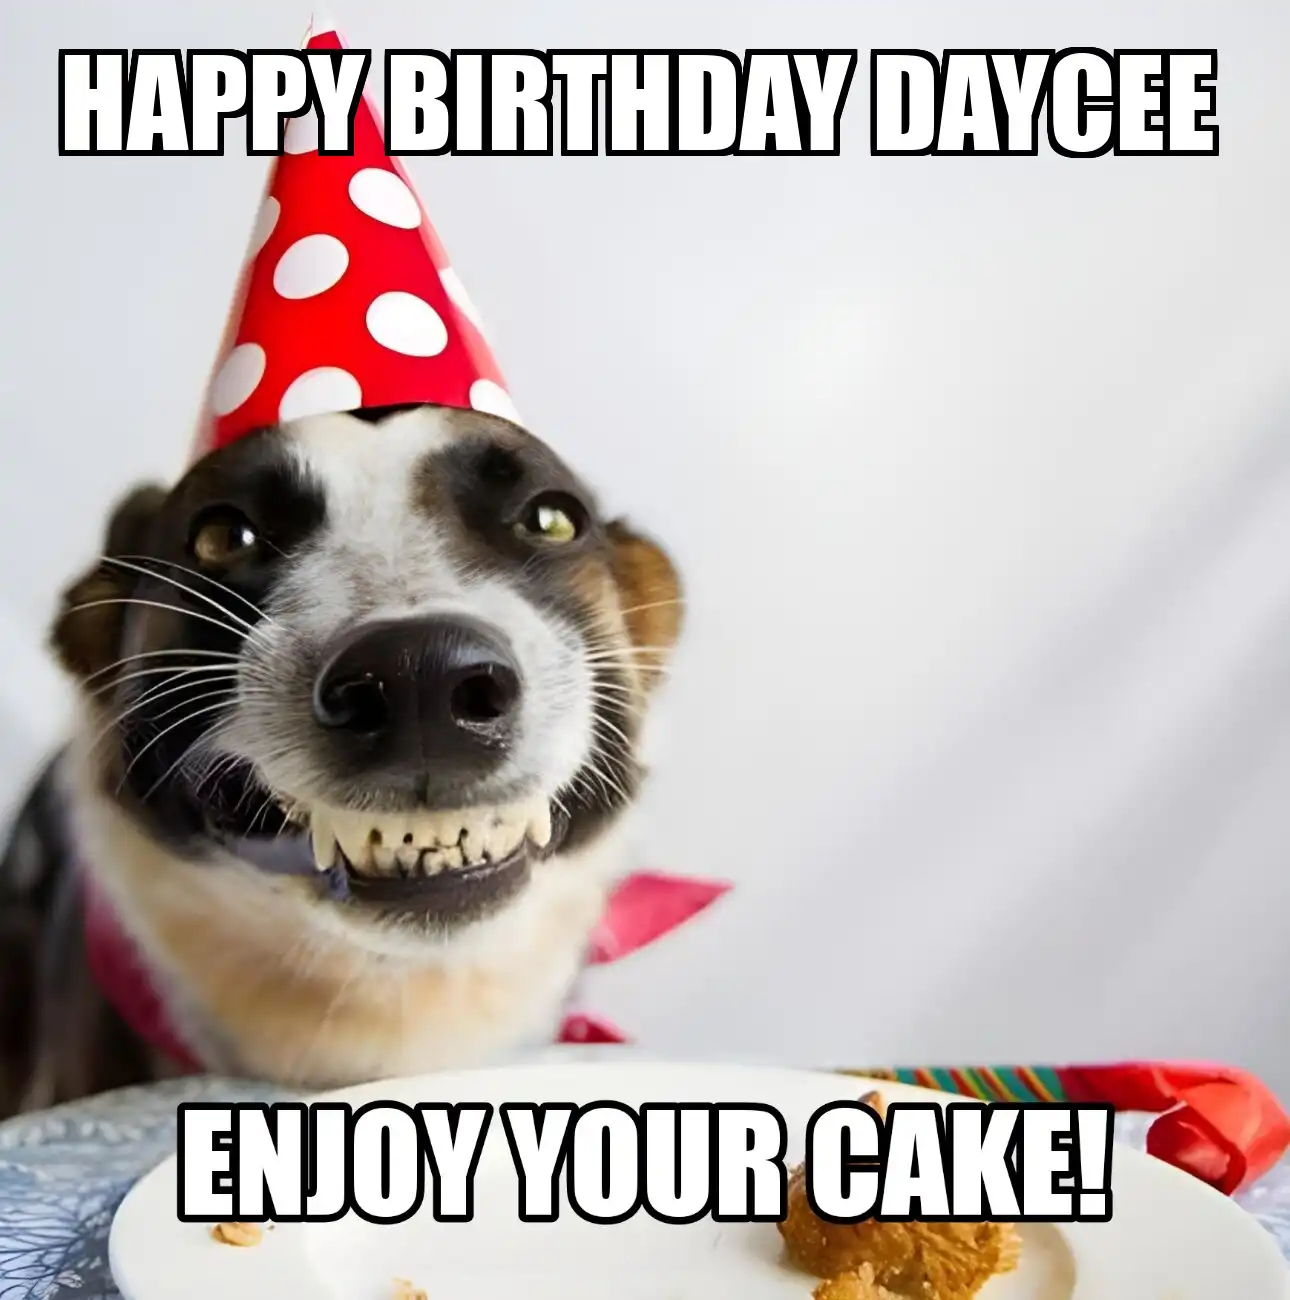 Happy Birthday Daycee Enjoy Your Cake Dog Meme